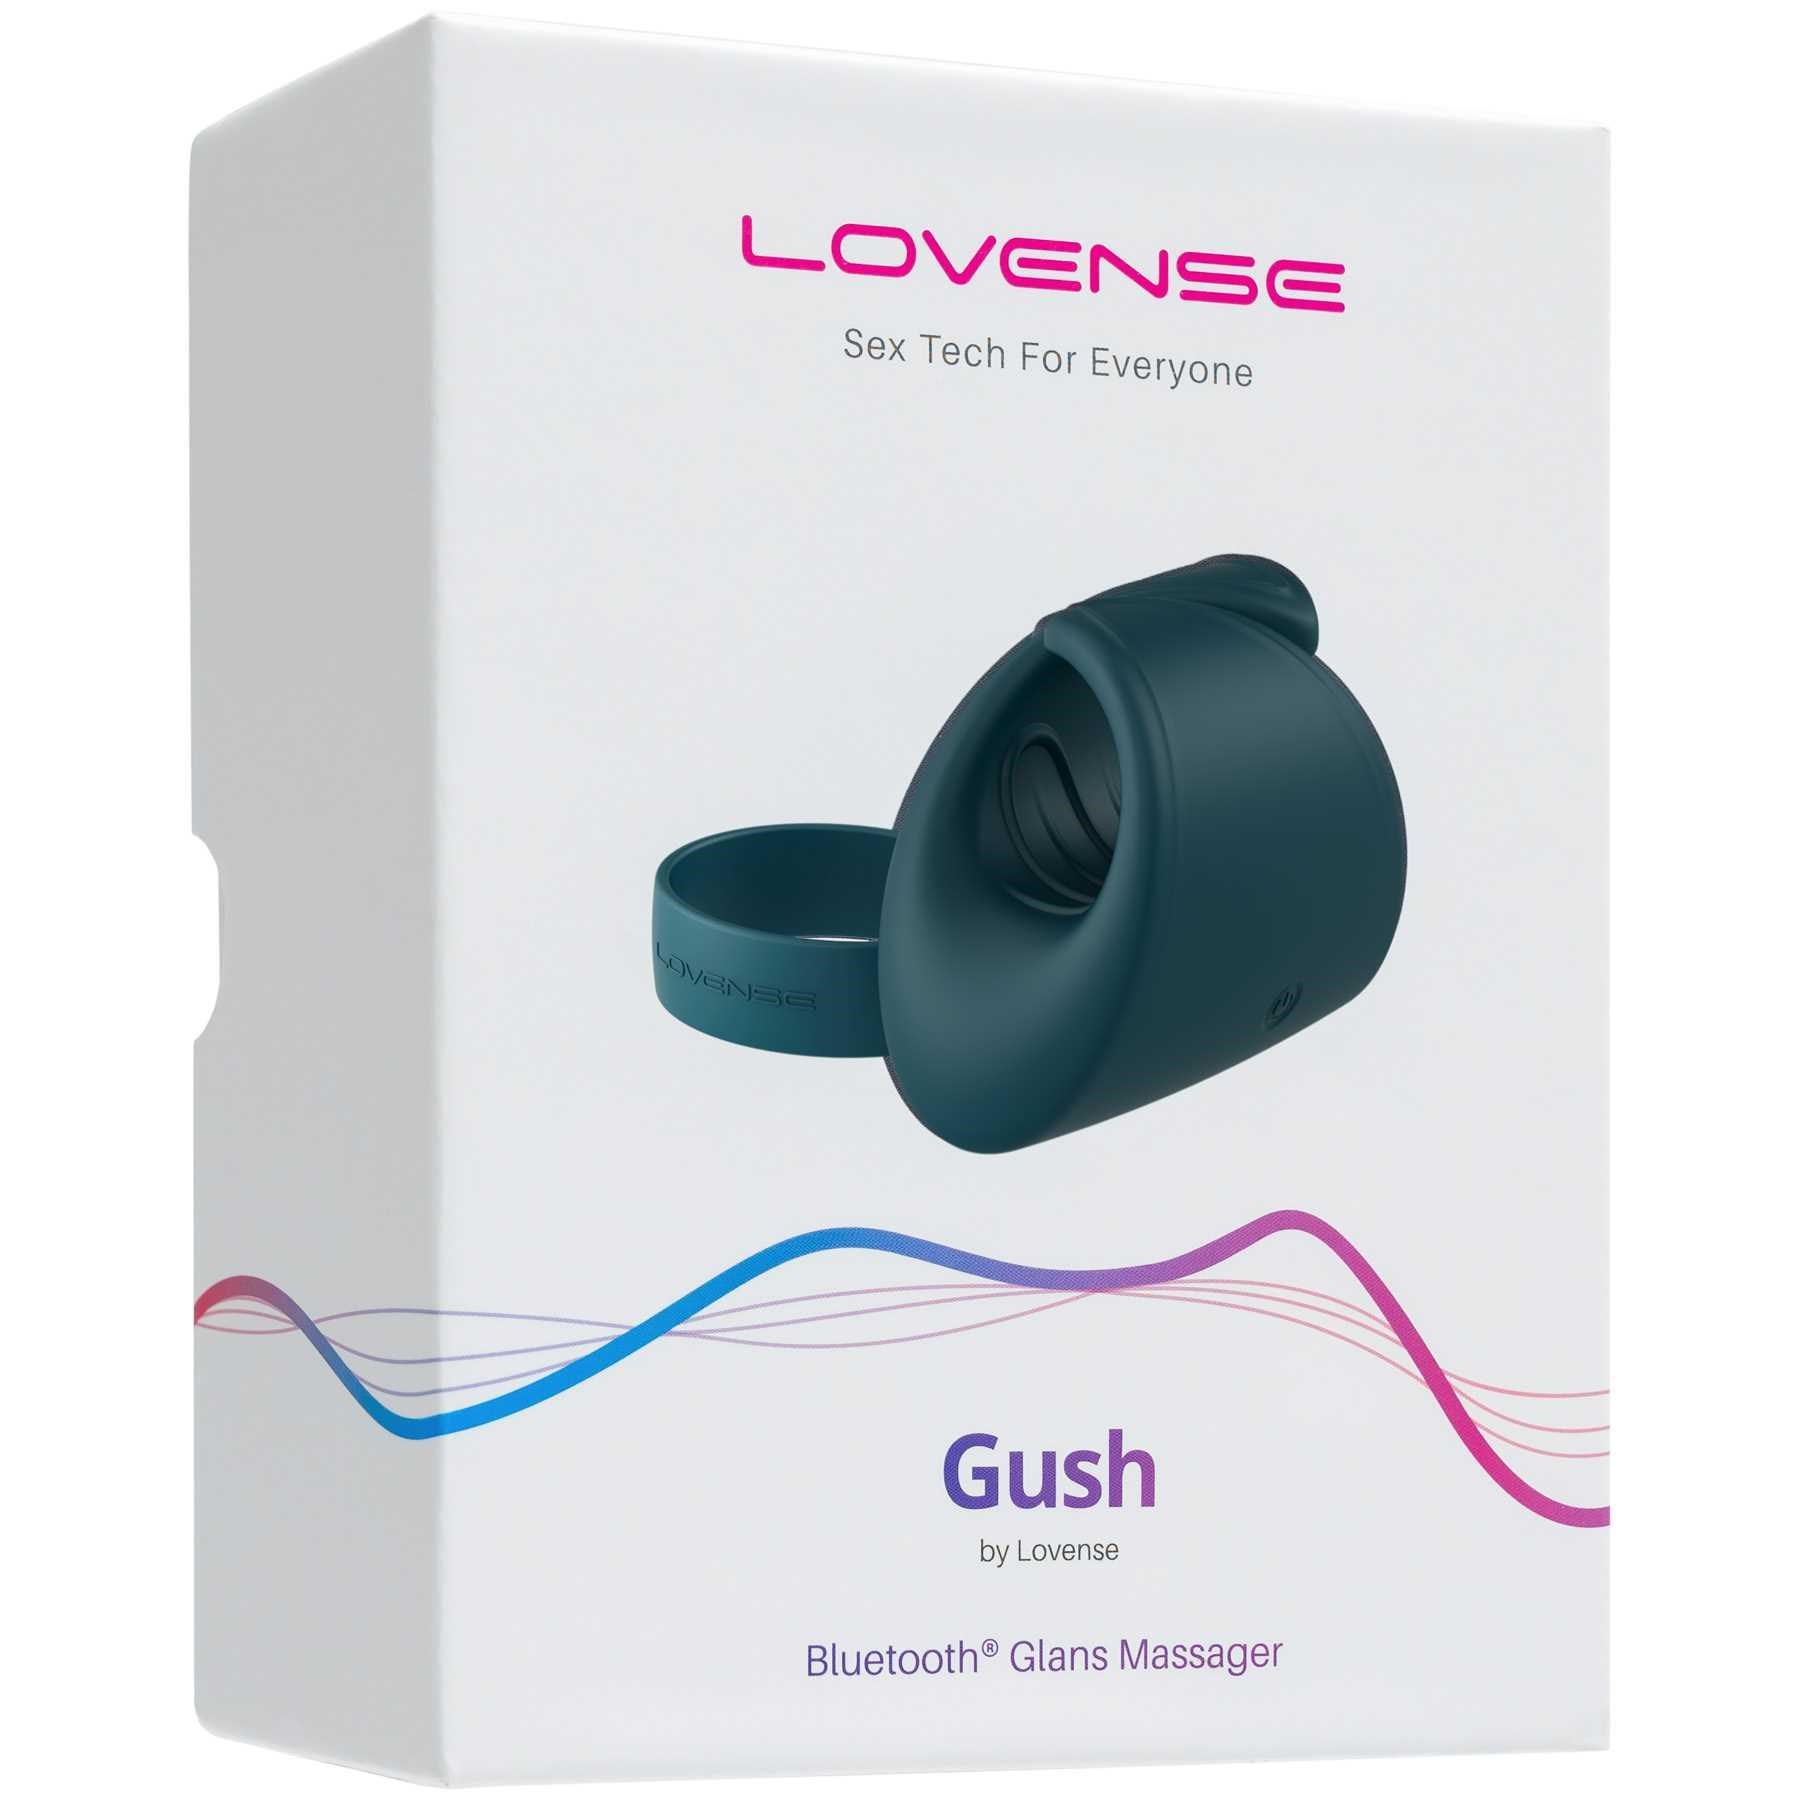 Lovense Gush Bluetooth Glans Massager packaging